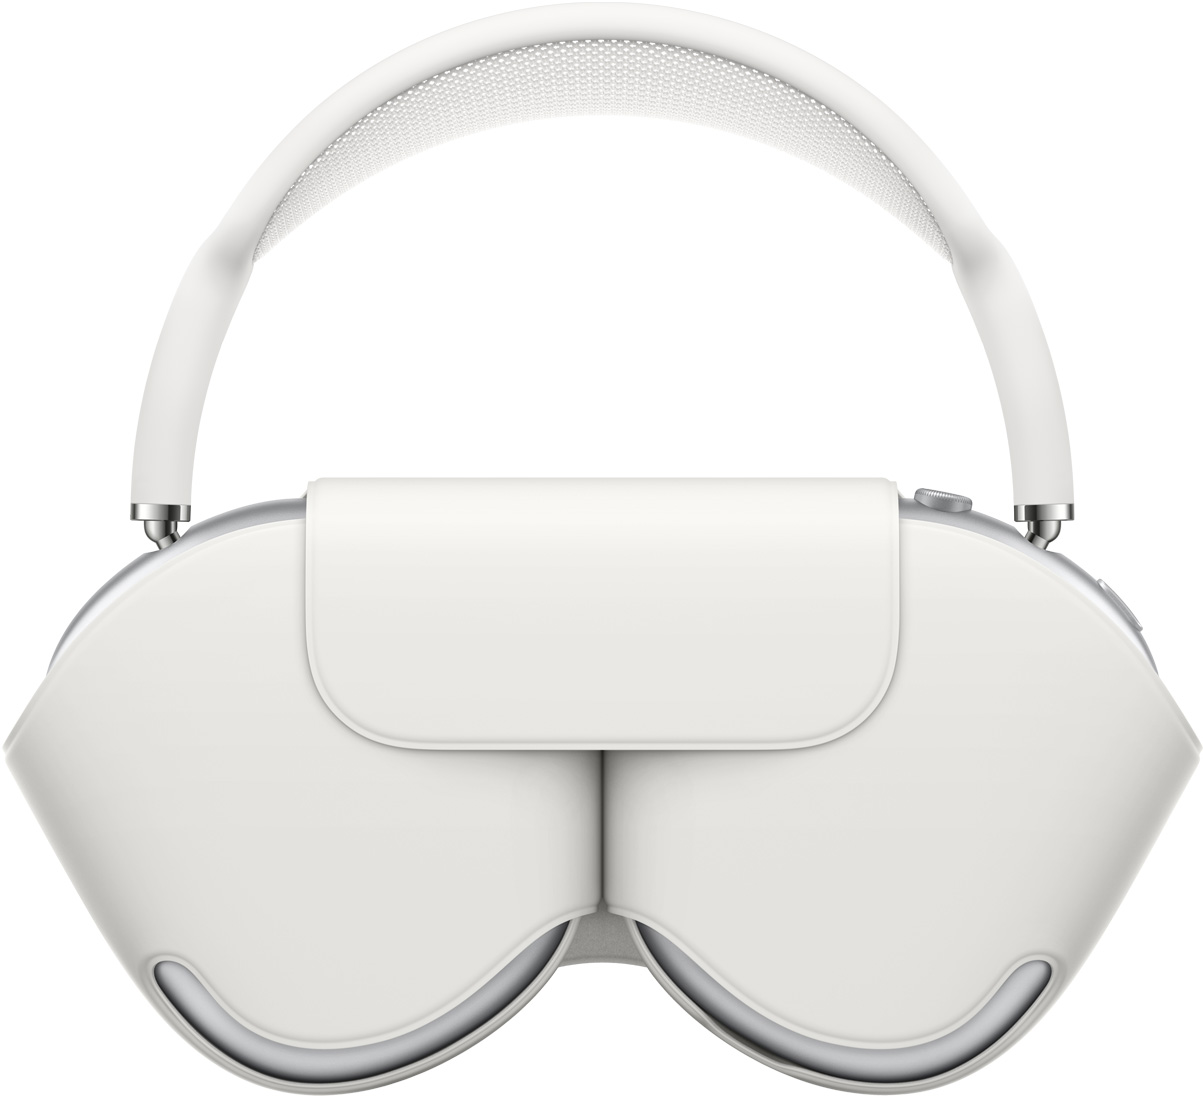 AirPods Max σε Ασημί με ασορτί λευκή Έξυπνη θήκη που προστατεύει τα ακουστικά. Όταν τοποθετείται το κάλυμμα, επεκτείνεται πάνω από τη θήκη.